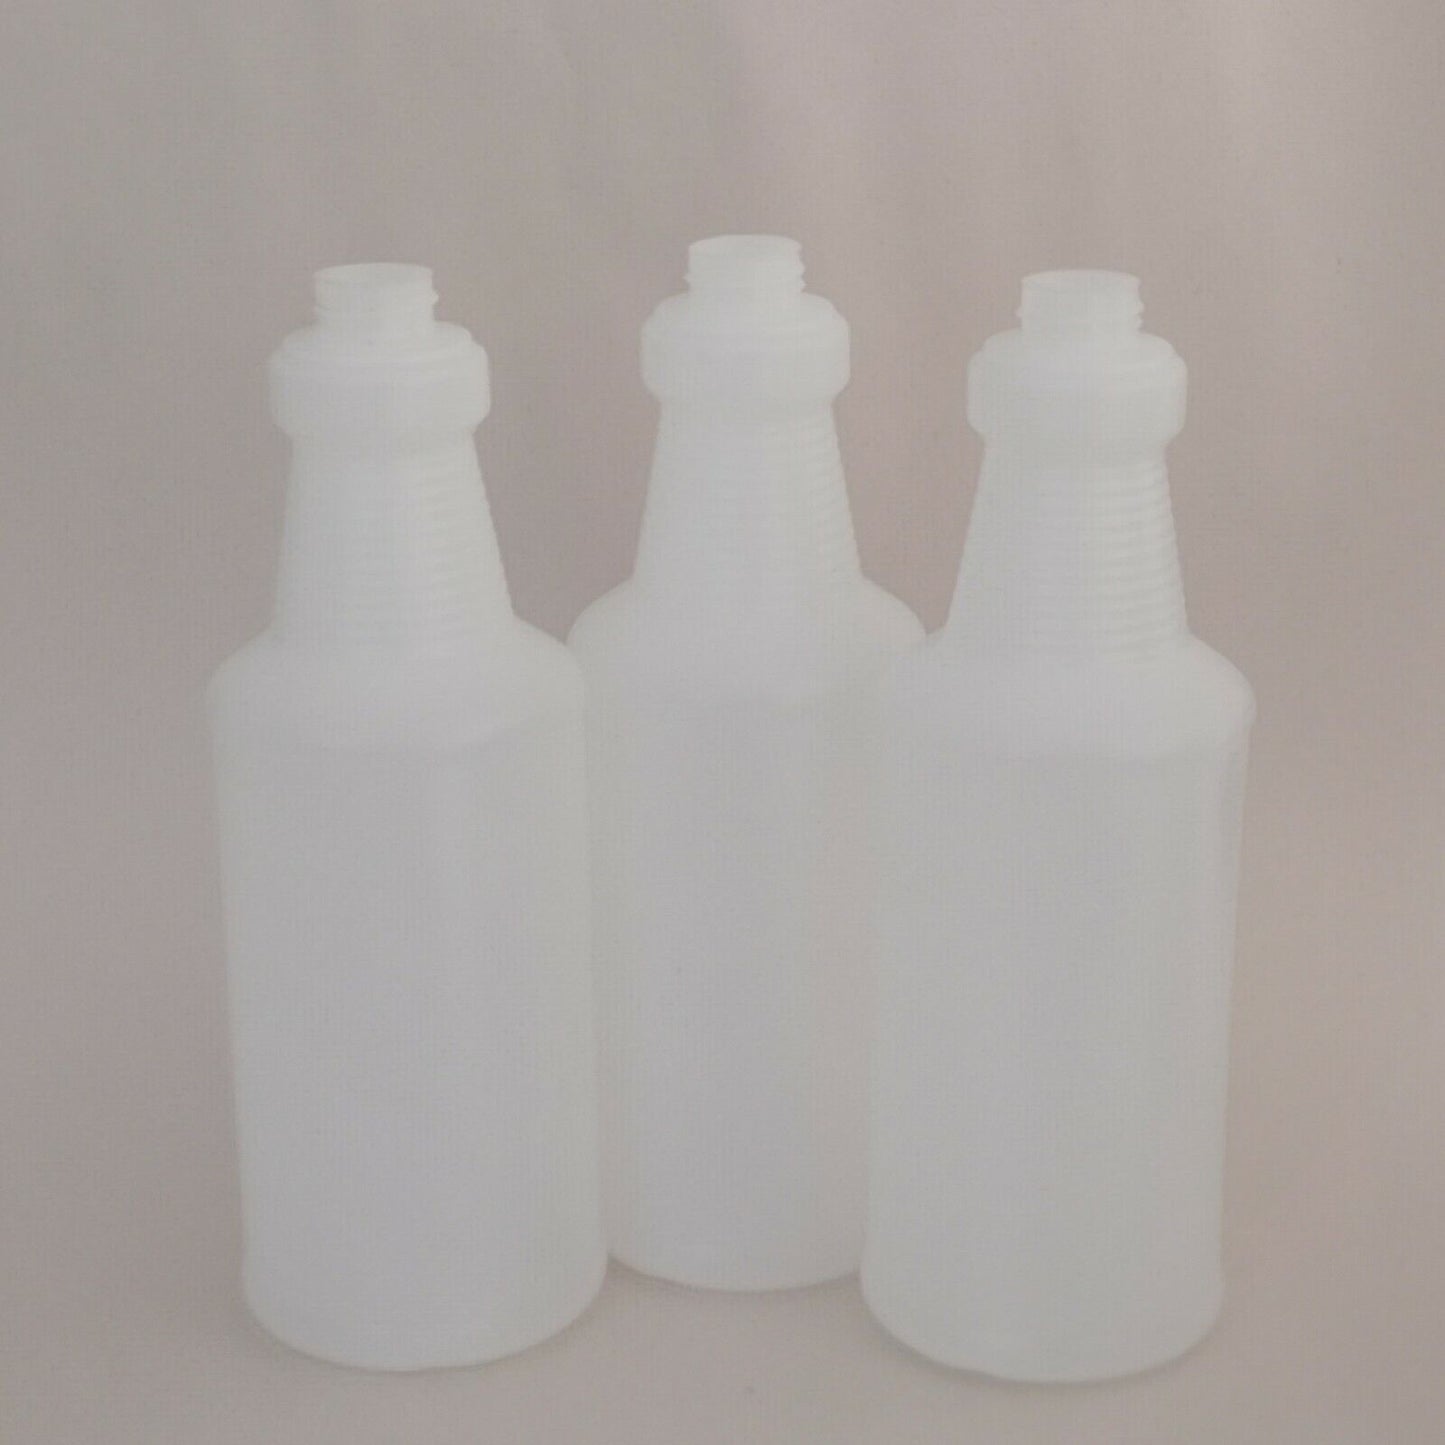 【36】Pk Spray Trigger w/32oz comm. Spray Bottles, 1ml stroke, sealed, 7974A-TB